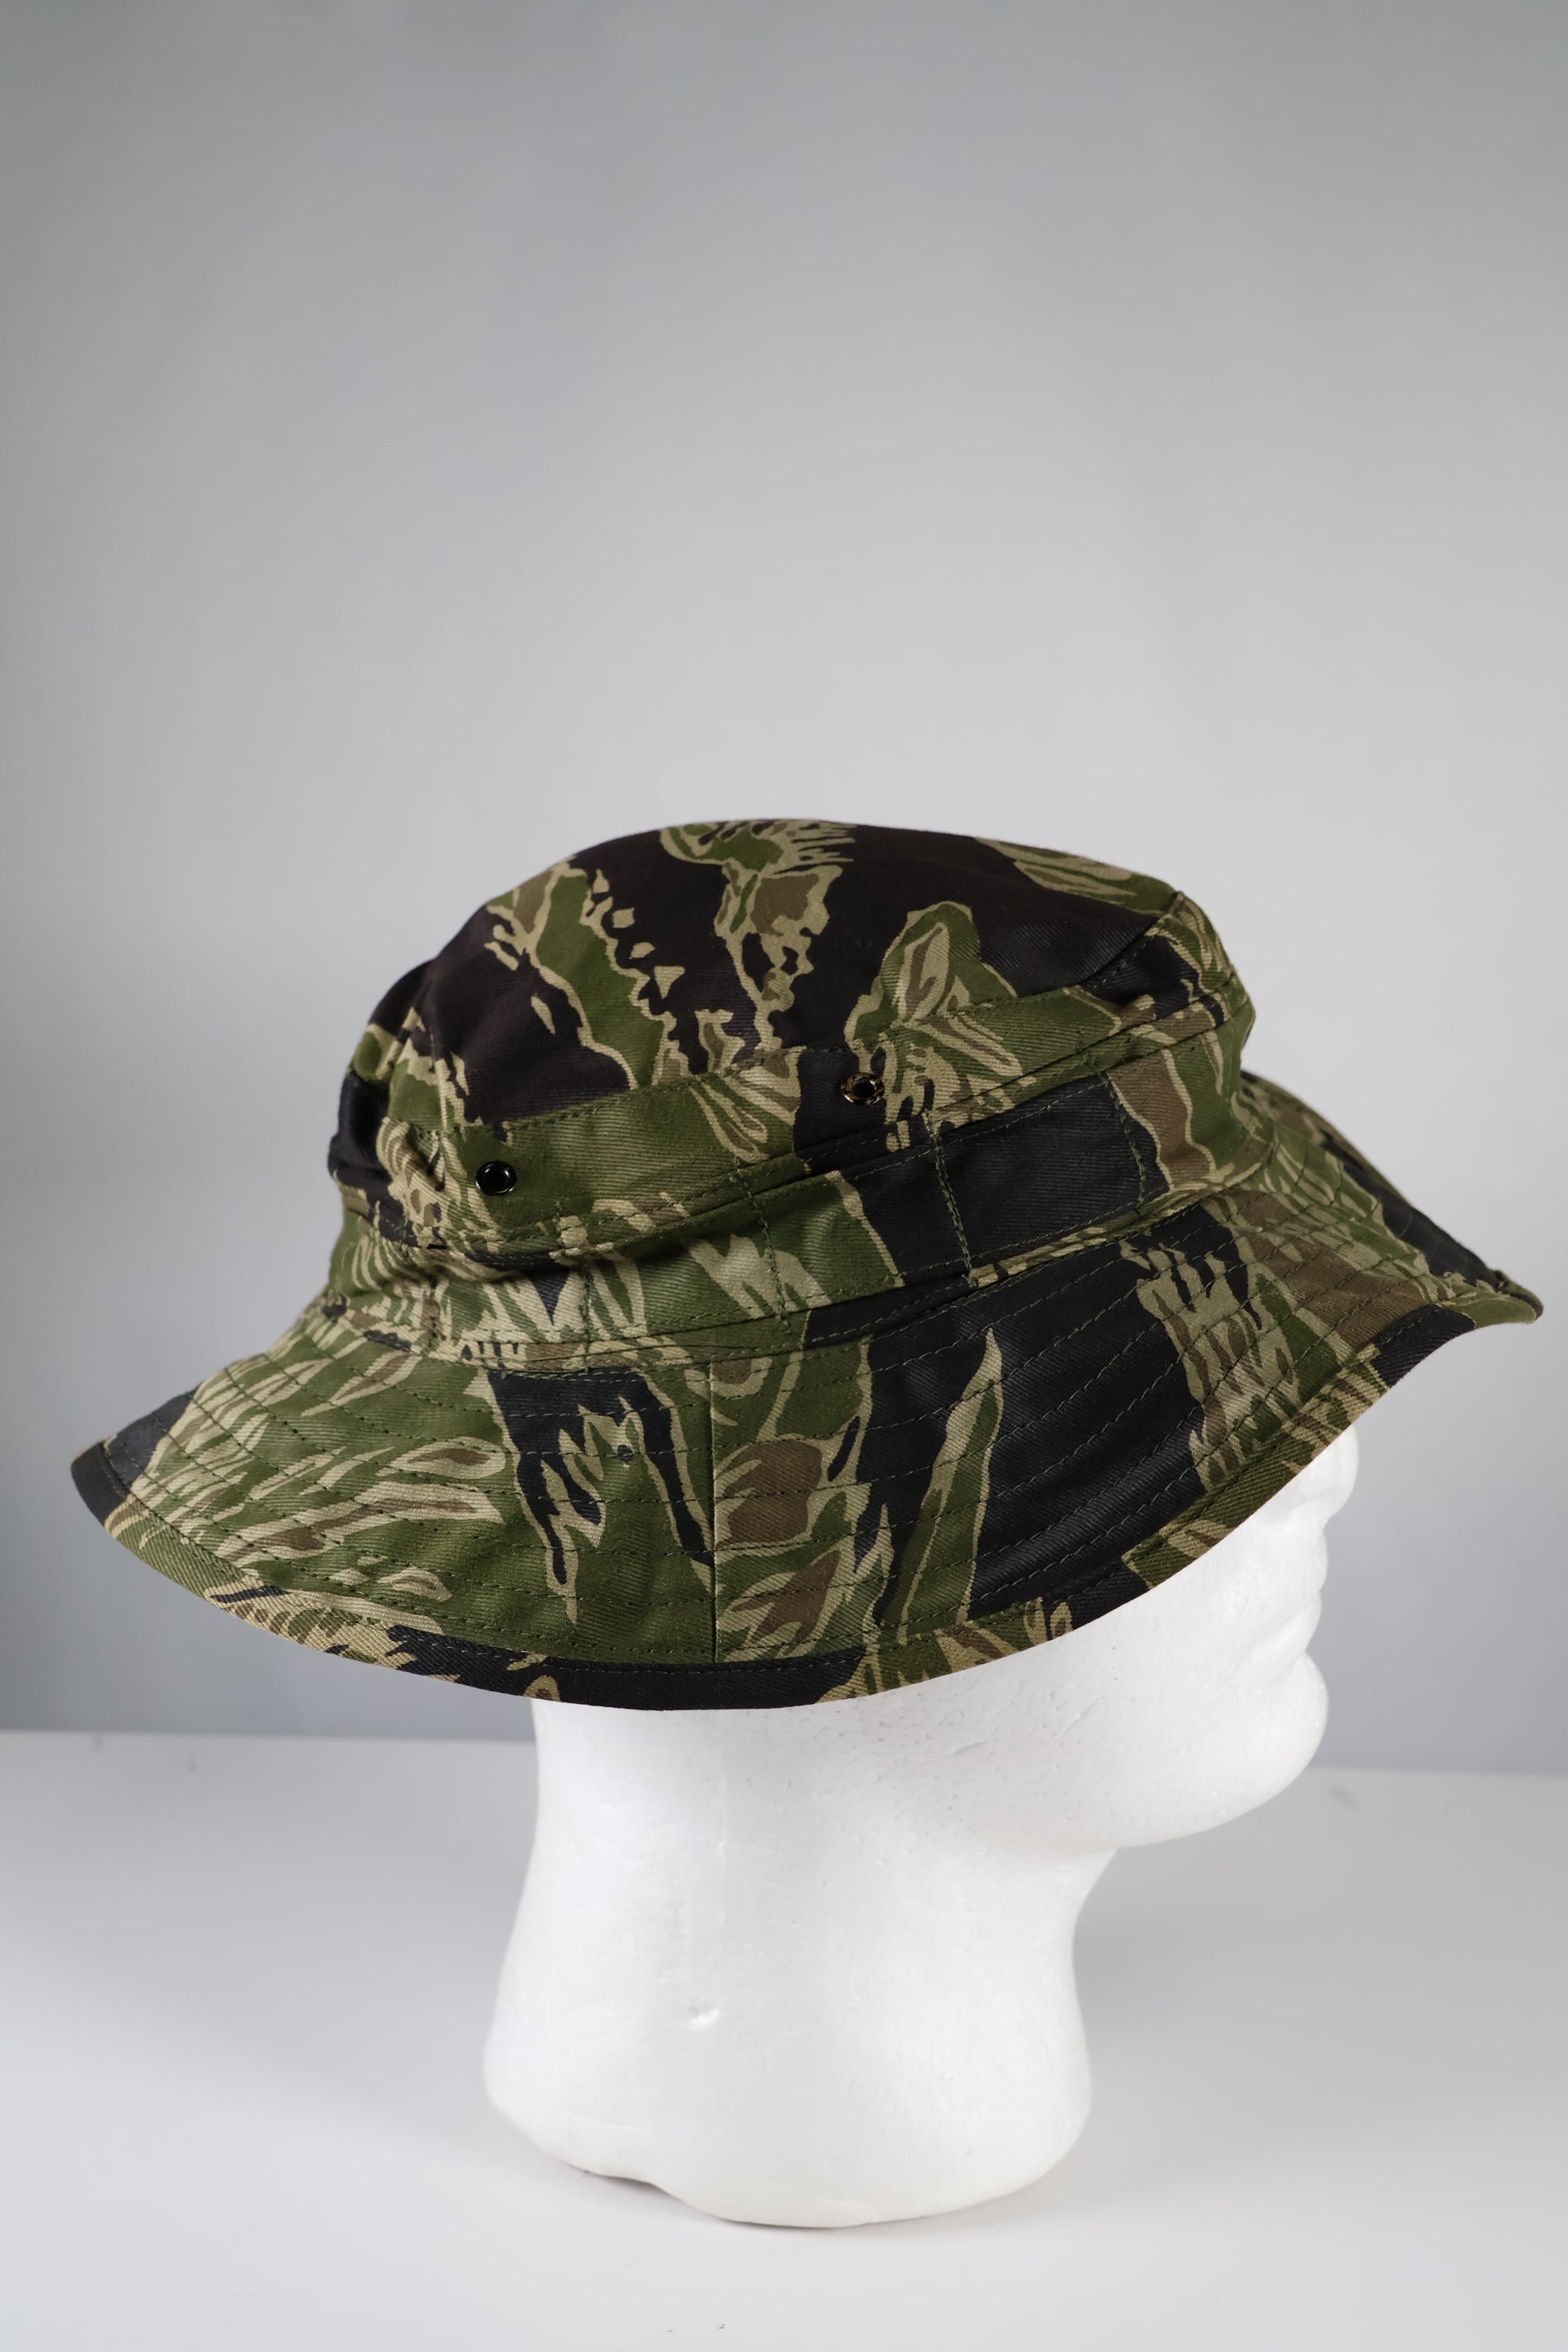 Real Okinawa Tiger Tiger Stripe CISO Cut Boonie Hat Almost unused